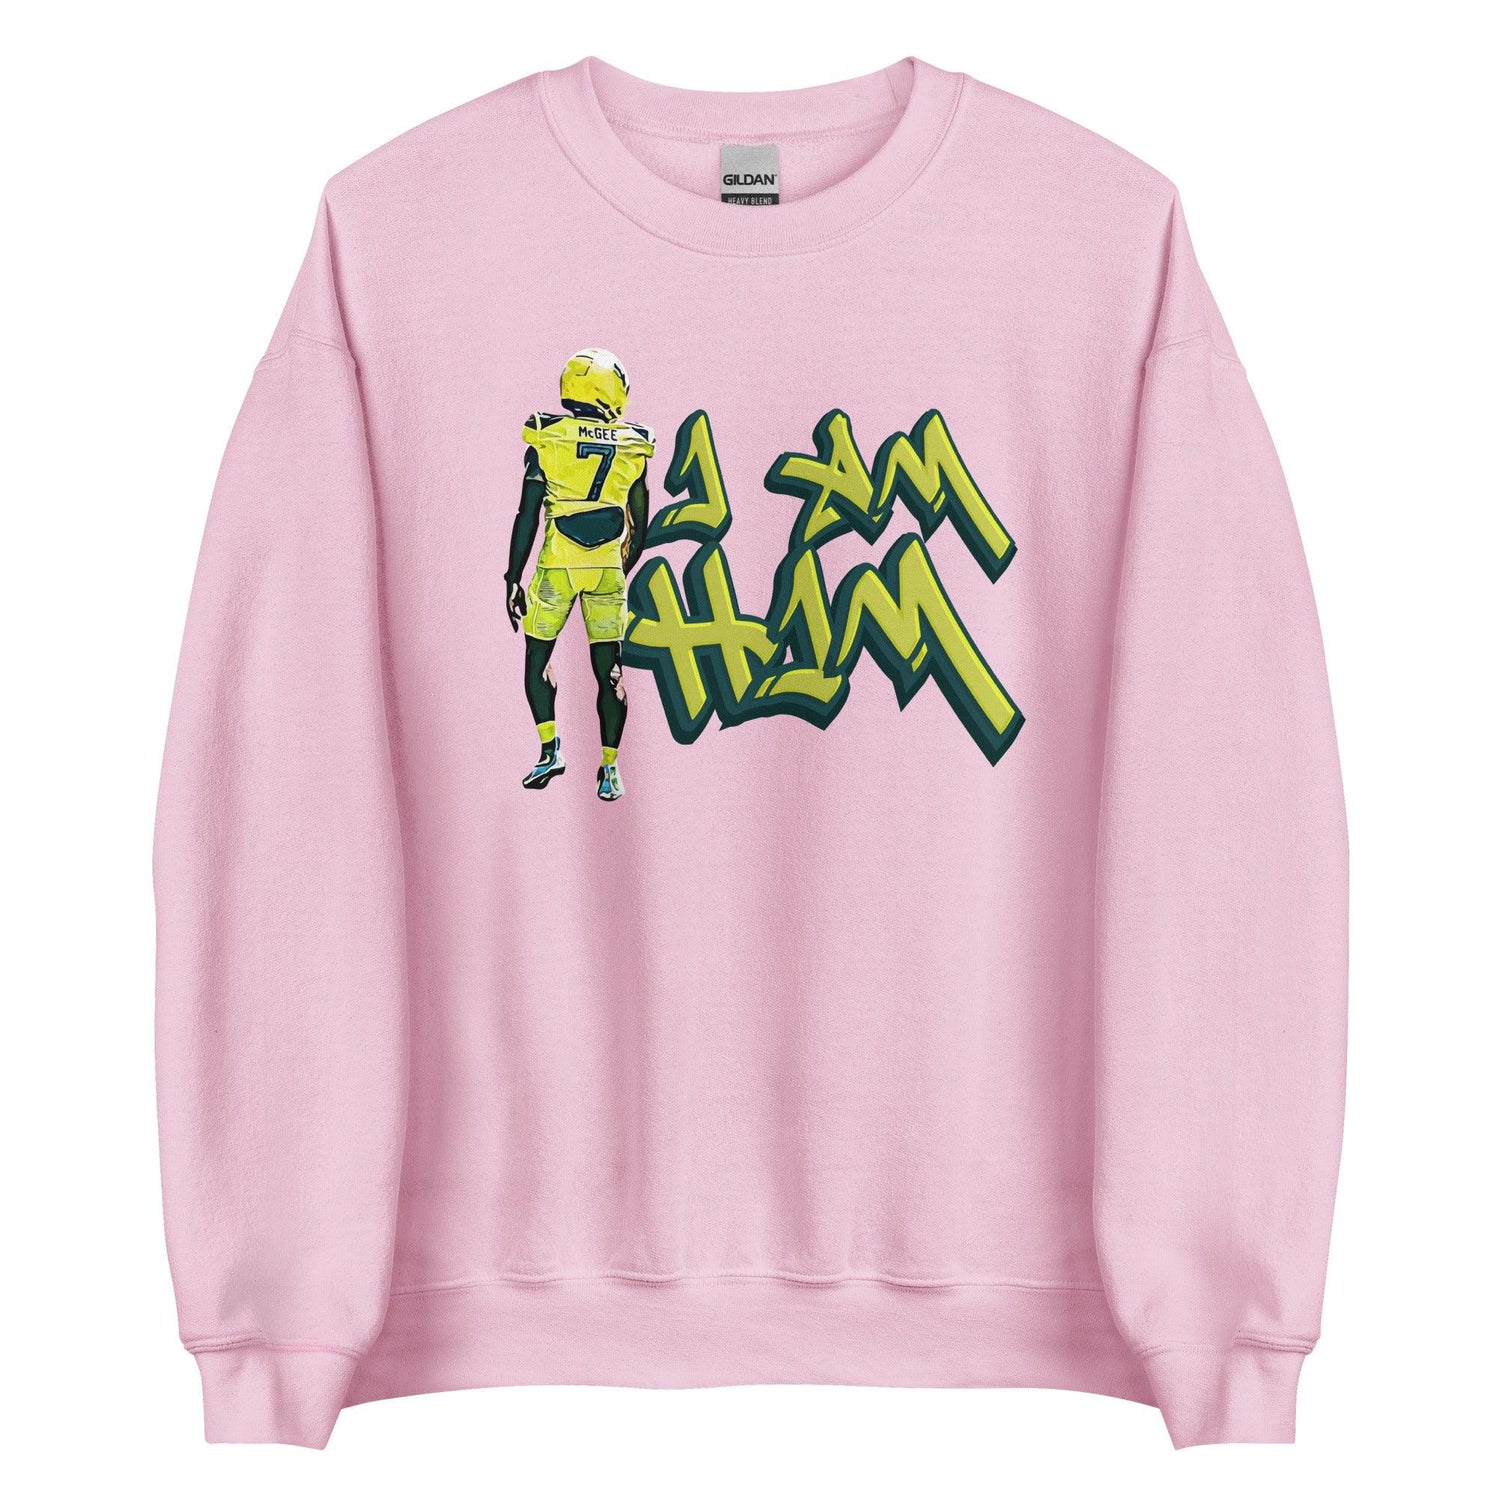 Seven McGee "I AM HIM" Sweatshirt - Fan Arch